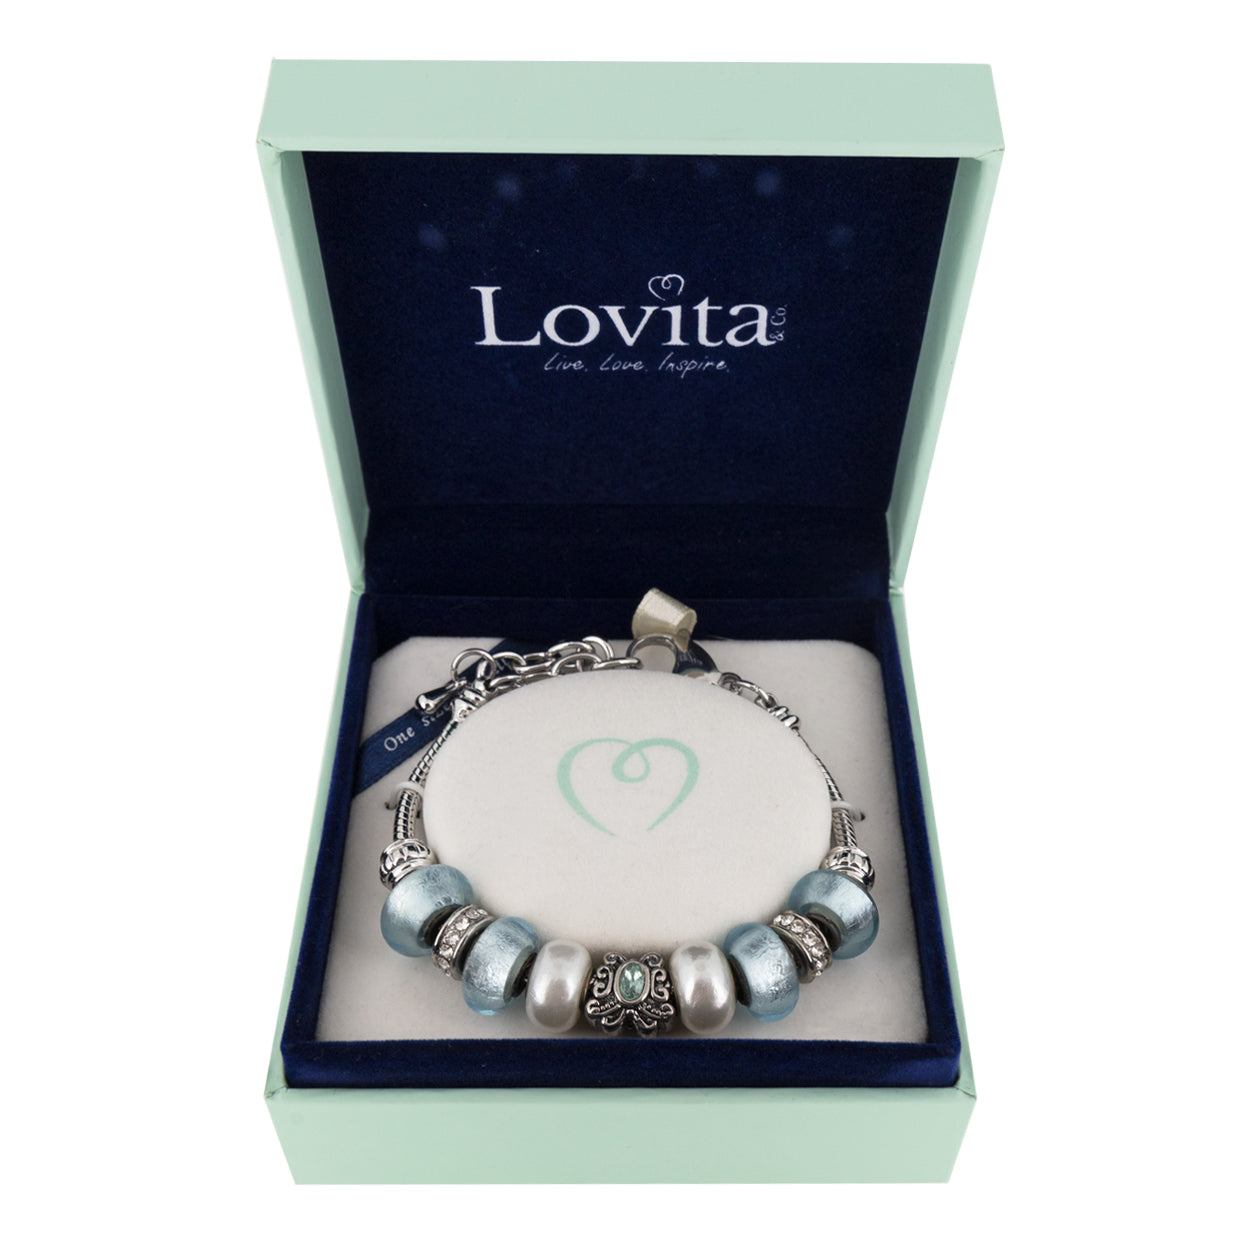 Lovita Charm Bracelet Light Blue Butterfly